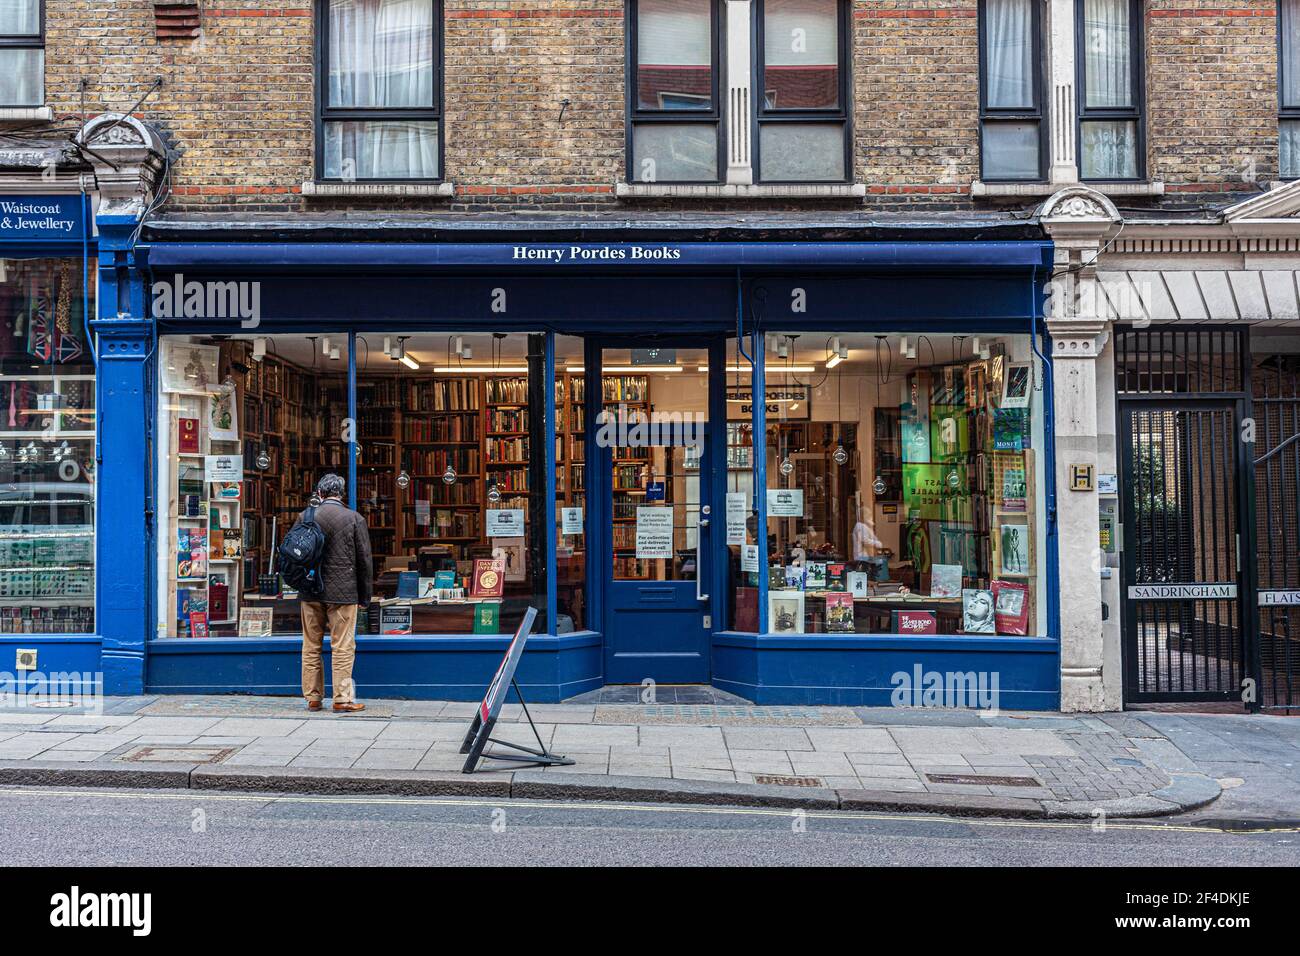 Henry Pordes Books, Charing Cross Road, Central London, England, UK. Stock Photo